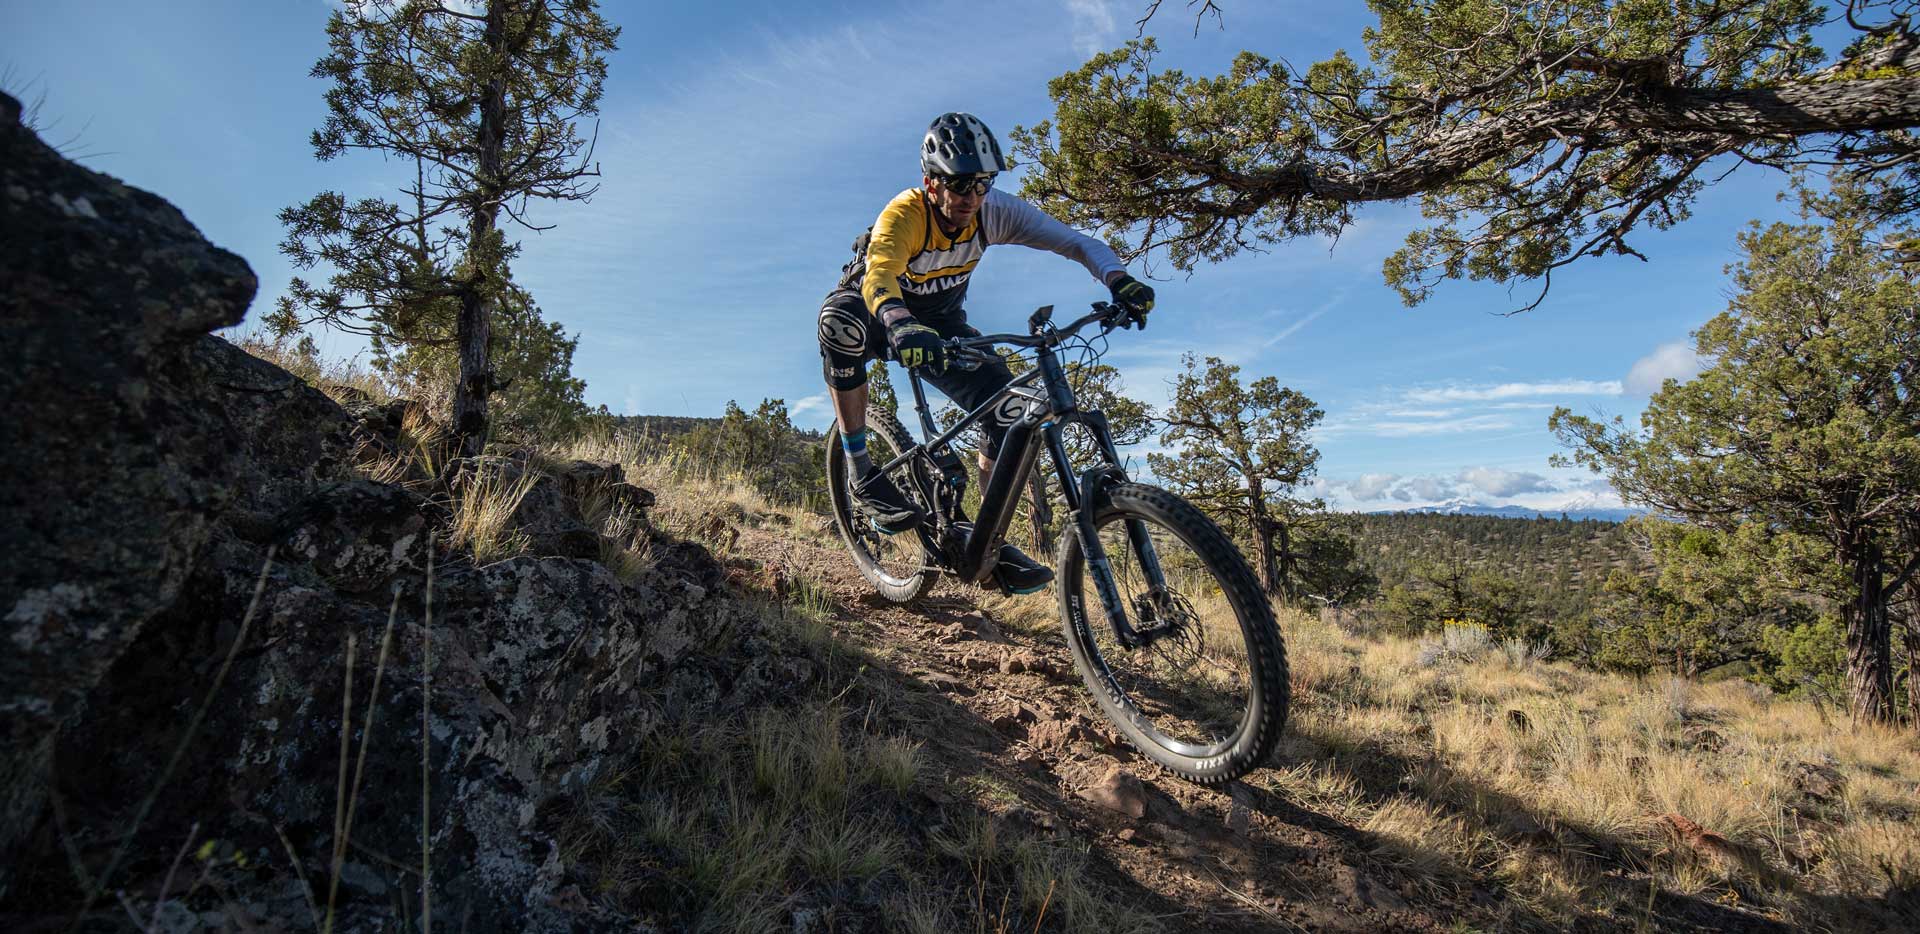 Mondraker Crafty R on a downhill mountain bike trail